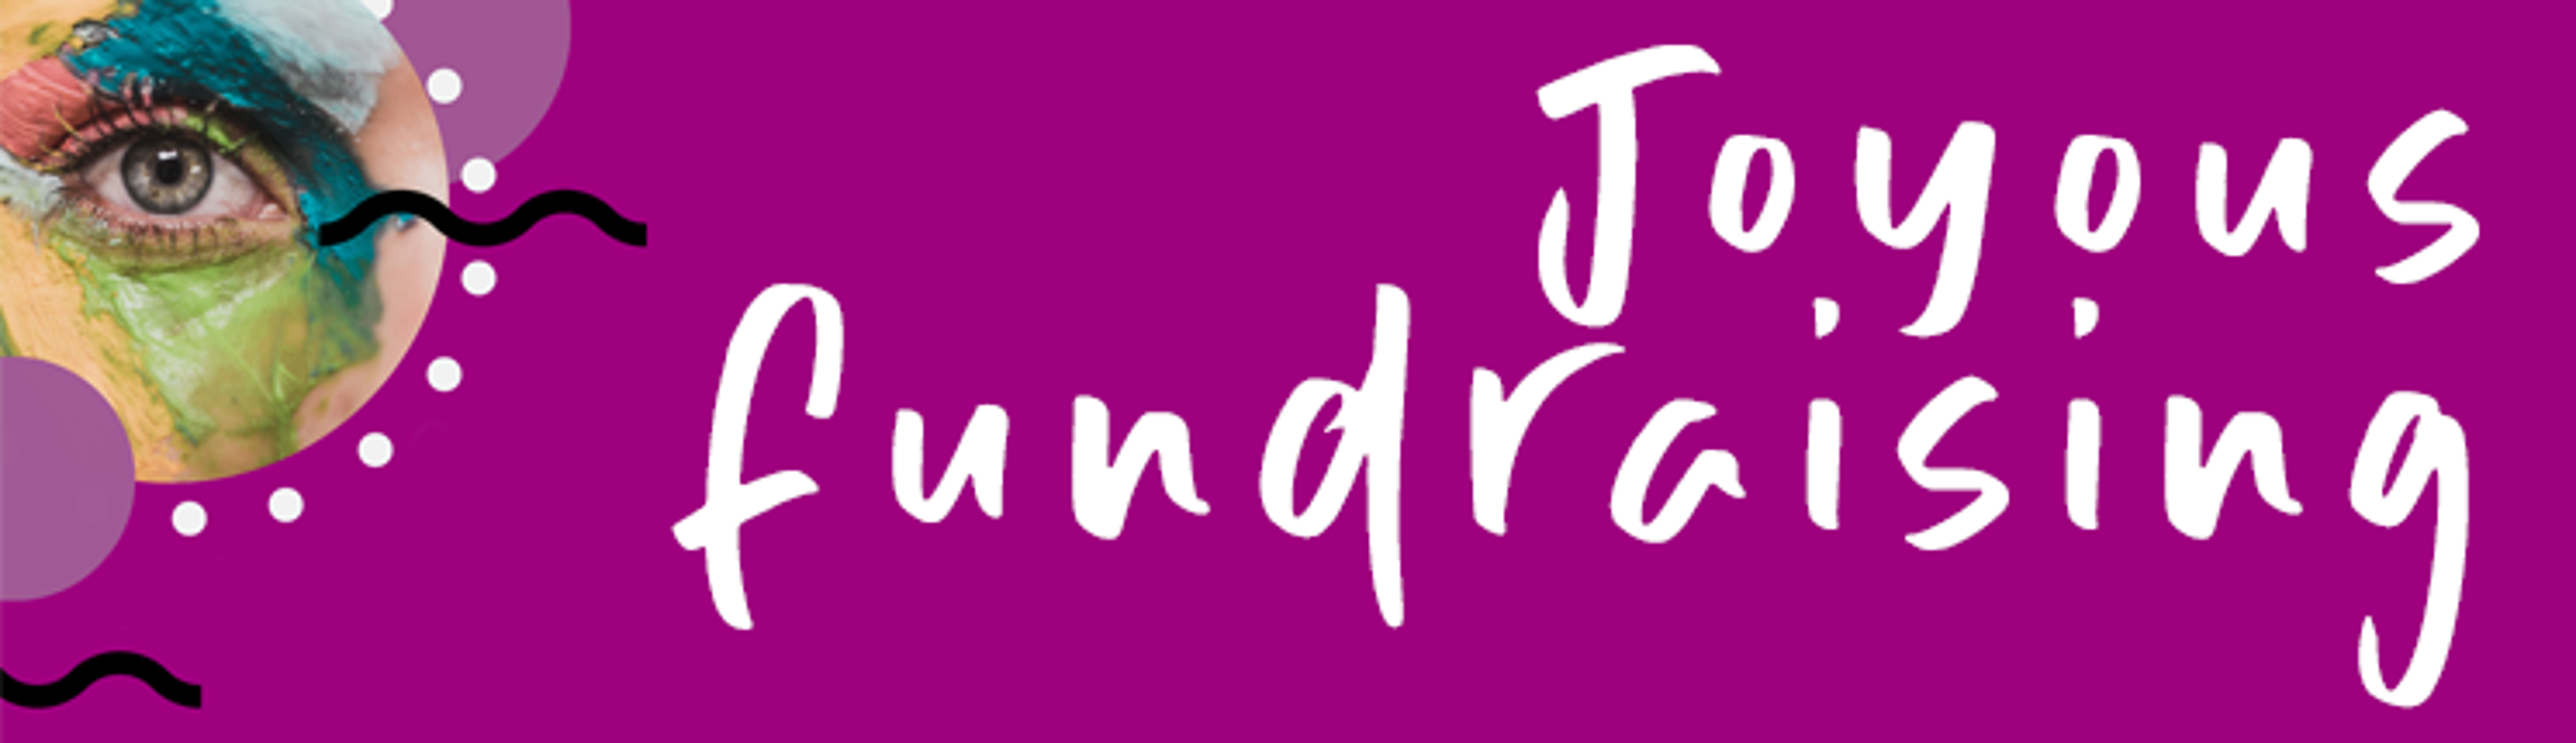 joyous fundraising logo